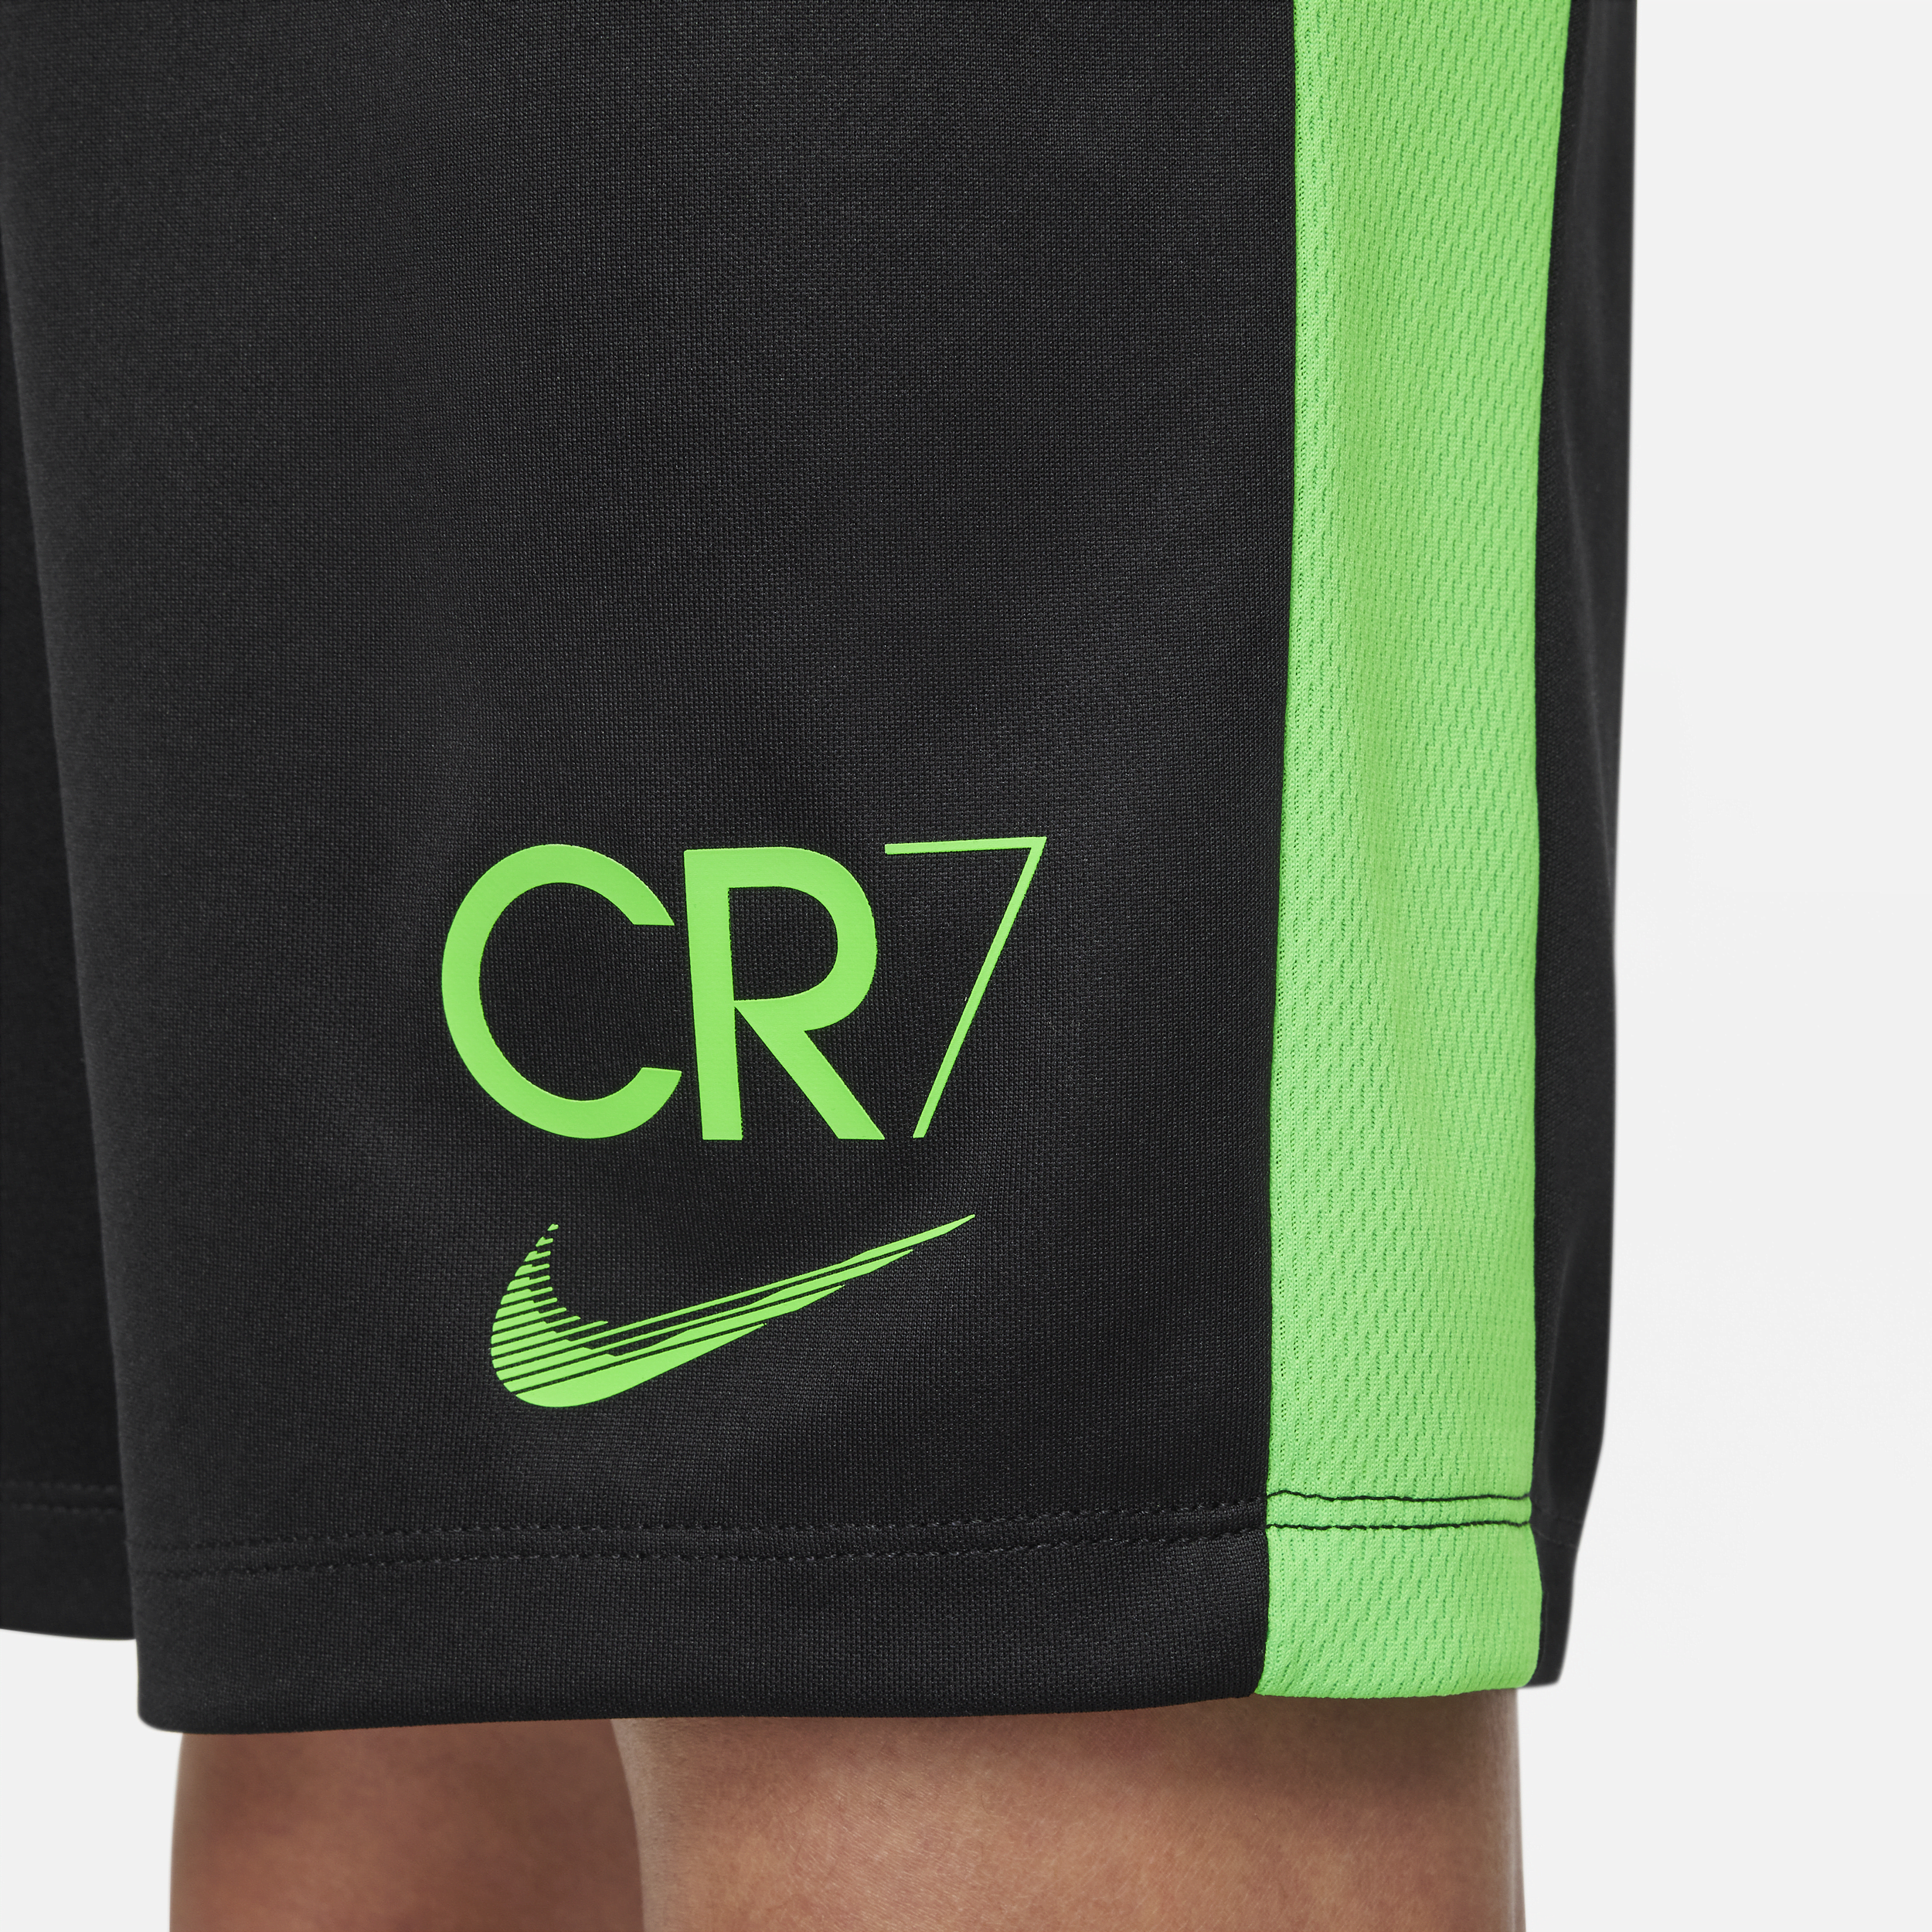 Nike CR7 Academy23 voetbalshorts met Dri-FIT voor kids Zwart